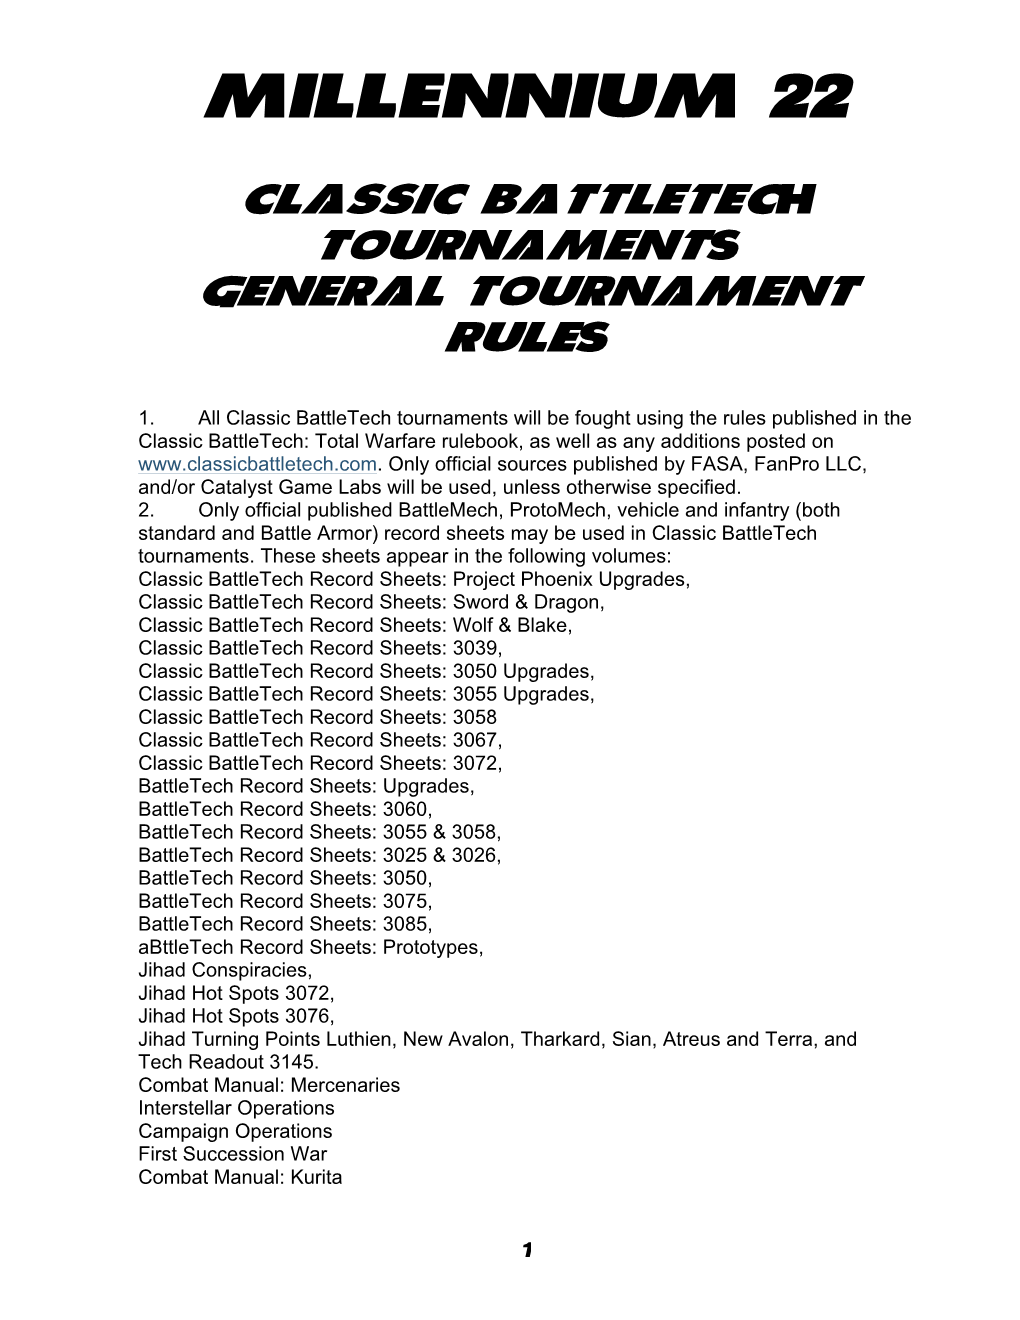 CBT Tournament Rules